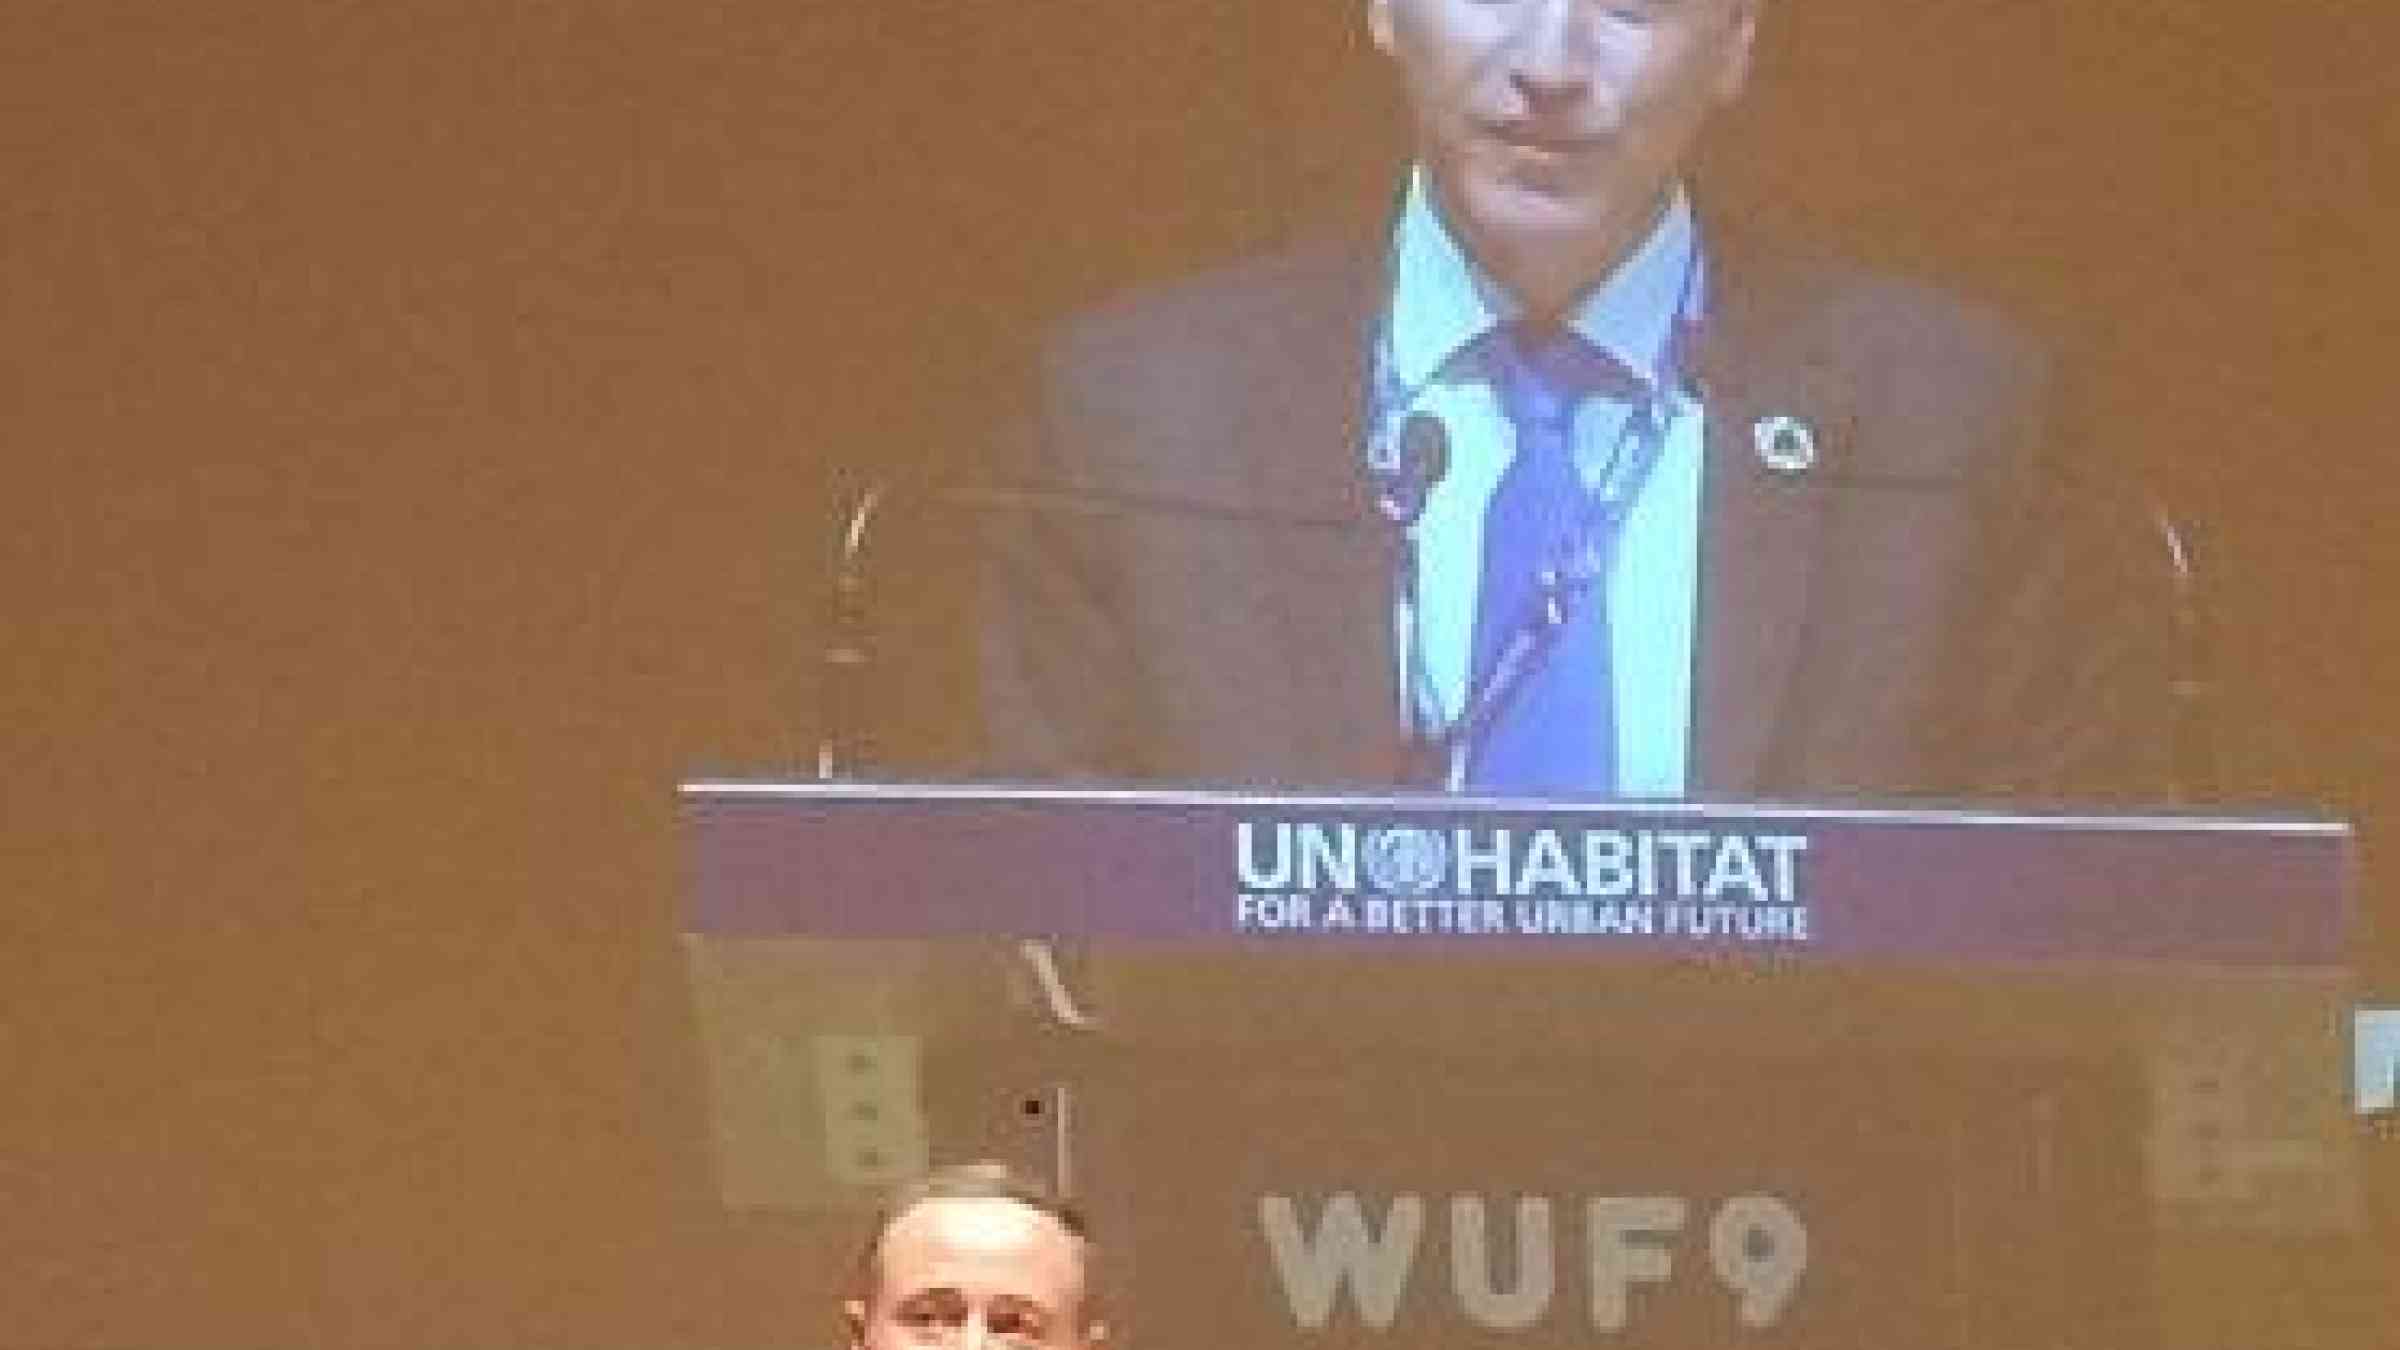 UNISDR head Robert Glasser speaking at the World Urban Forum in Kuala Lumpur, Malaysia